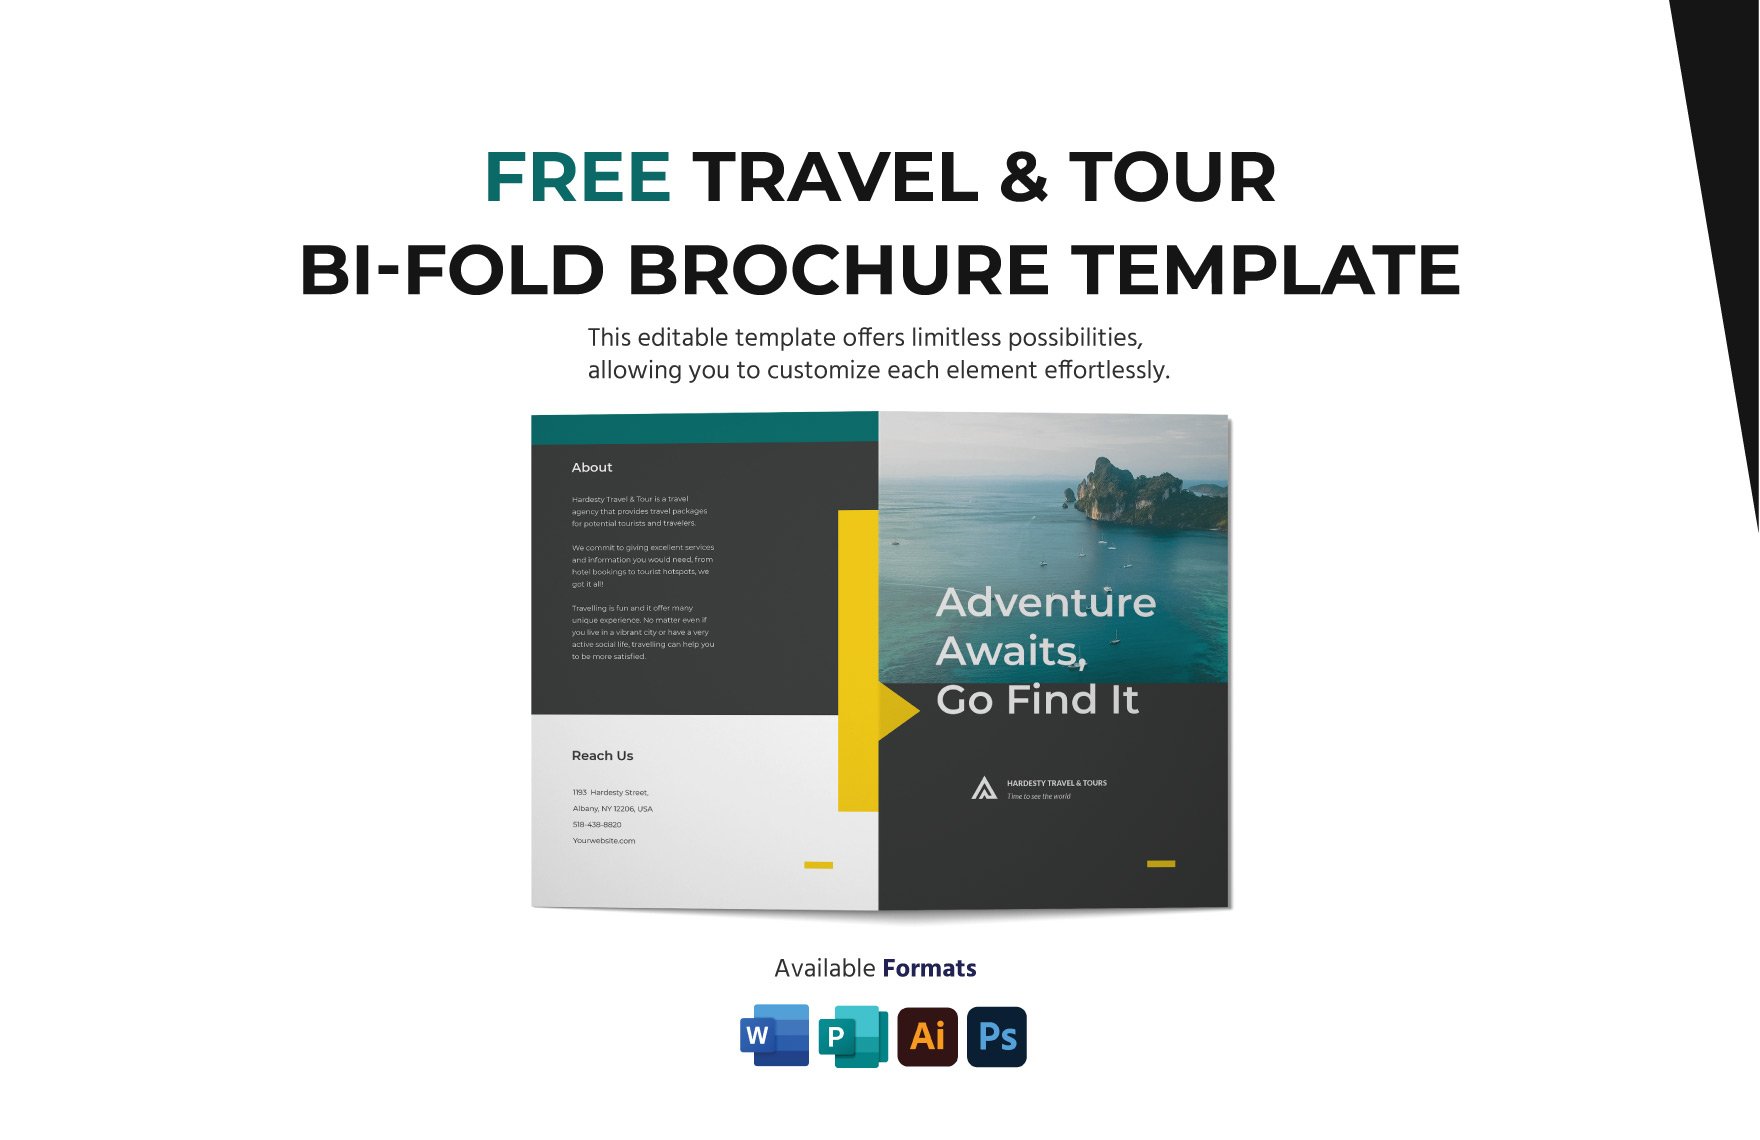 Travel & Tour Bi-Fold Brochure Template